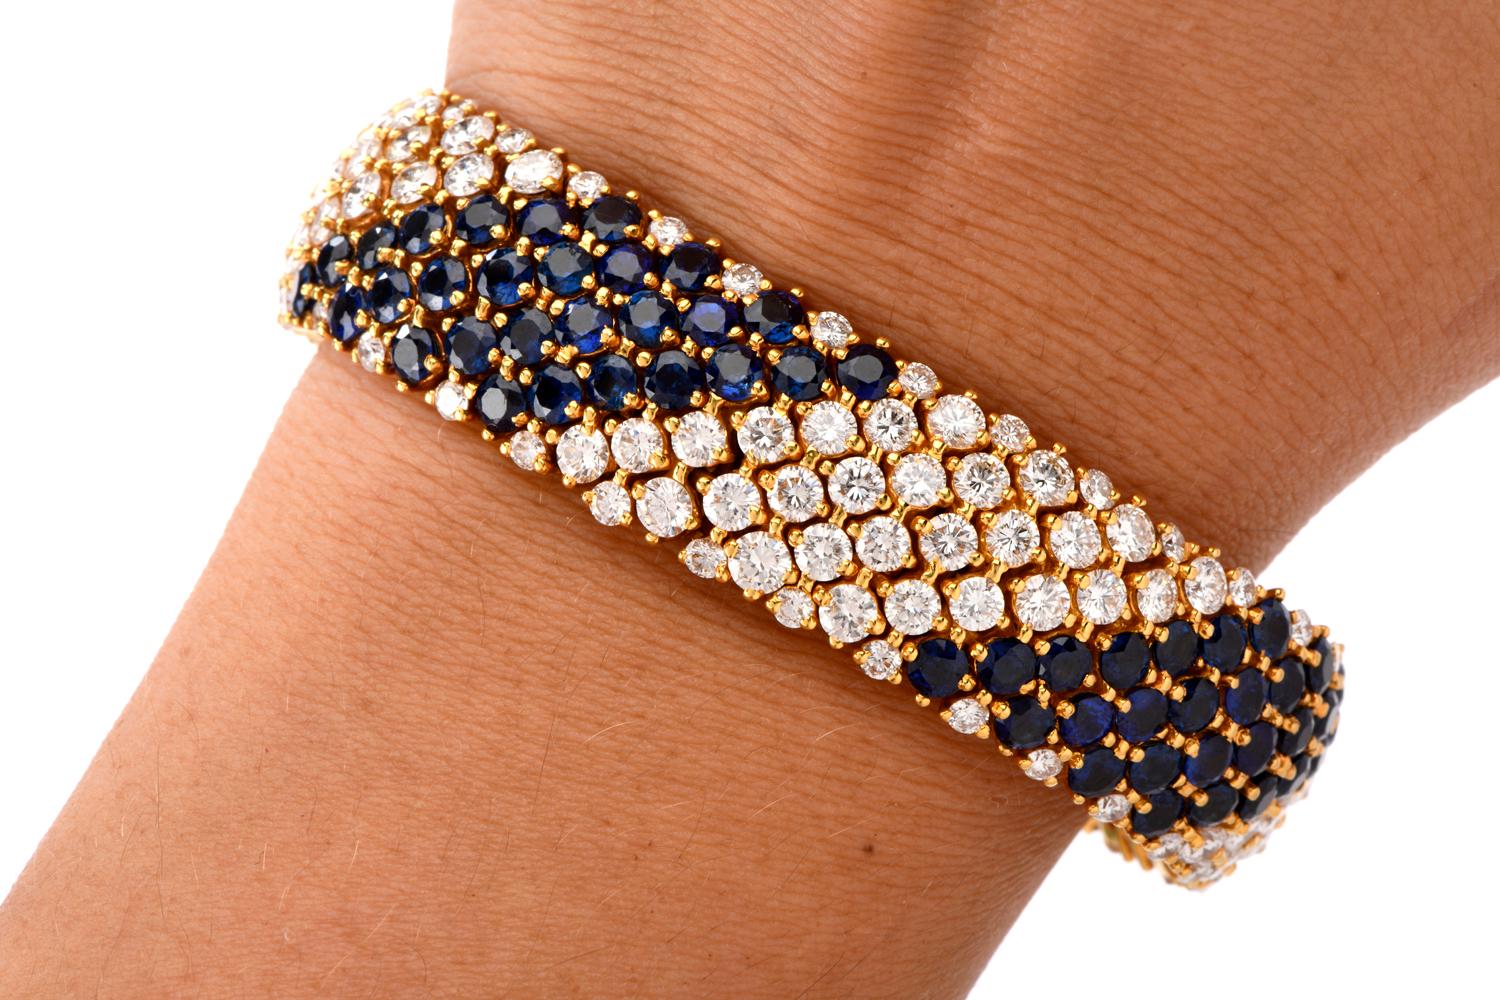 Women's 1980s Wide 36.28 Carat Diamond and Sapphire 18 Karat Bracelet